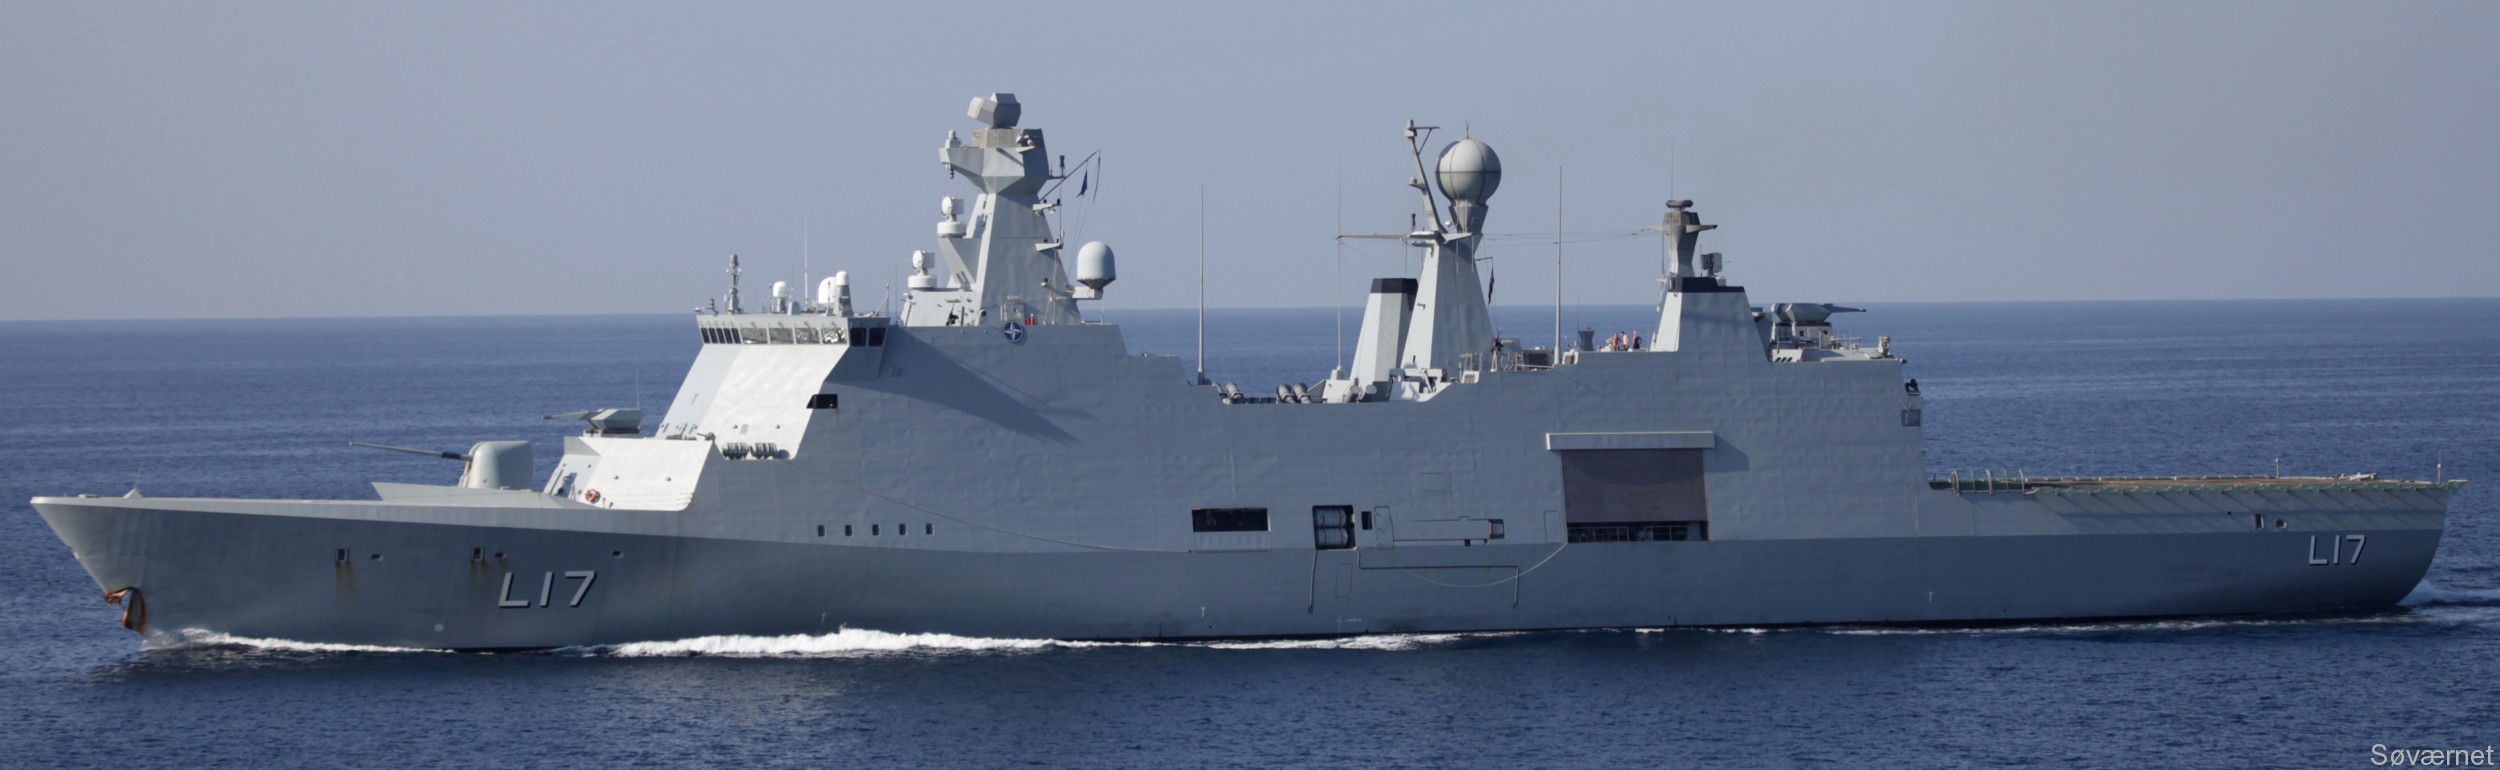 f-342 hdms esbern snare l-17 frigate command support ship royal danish navy 48